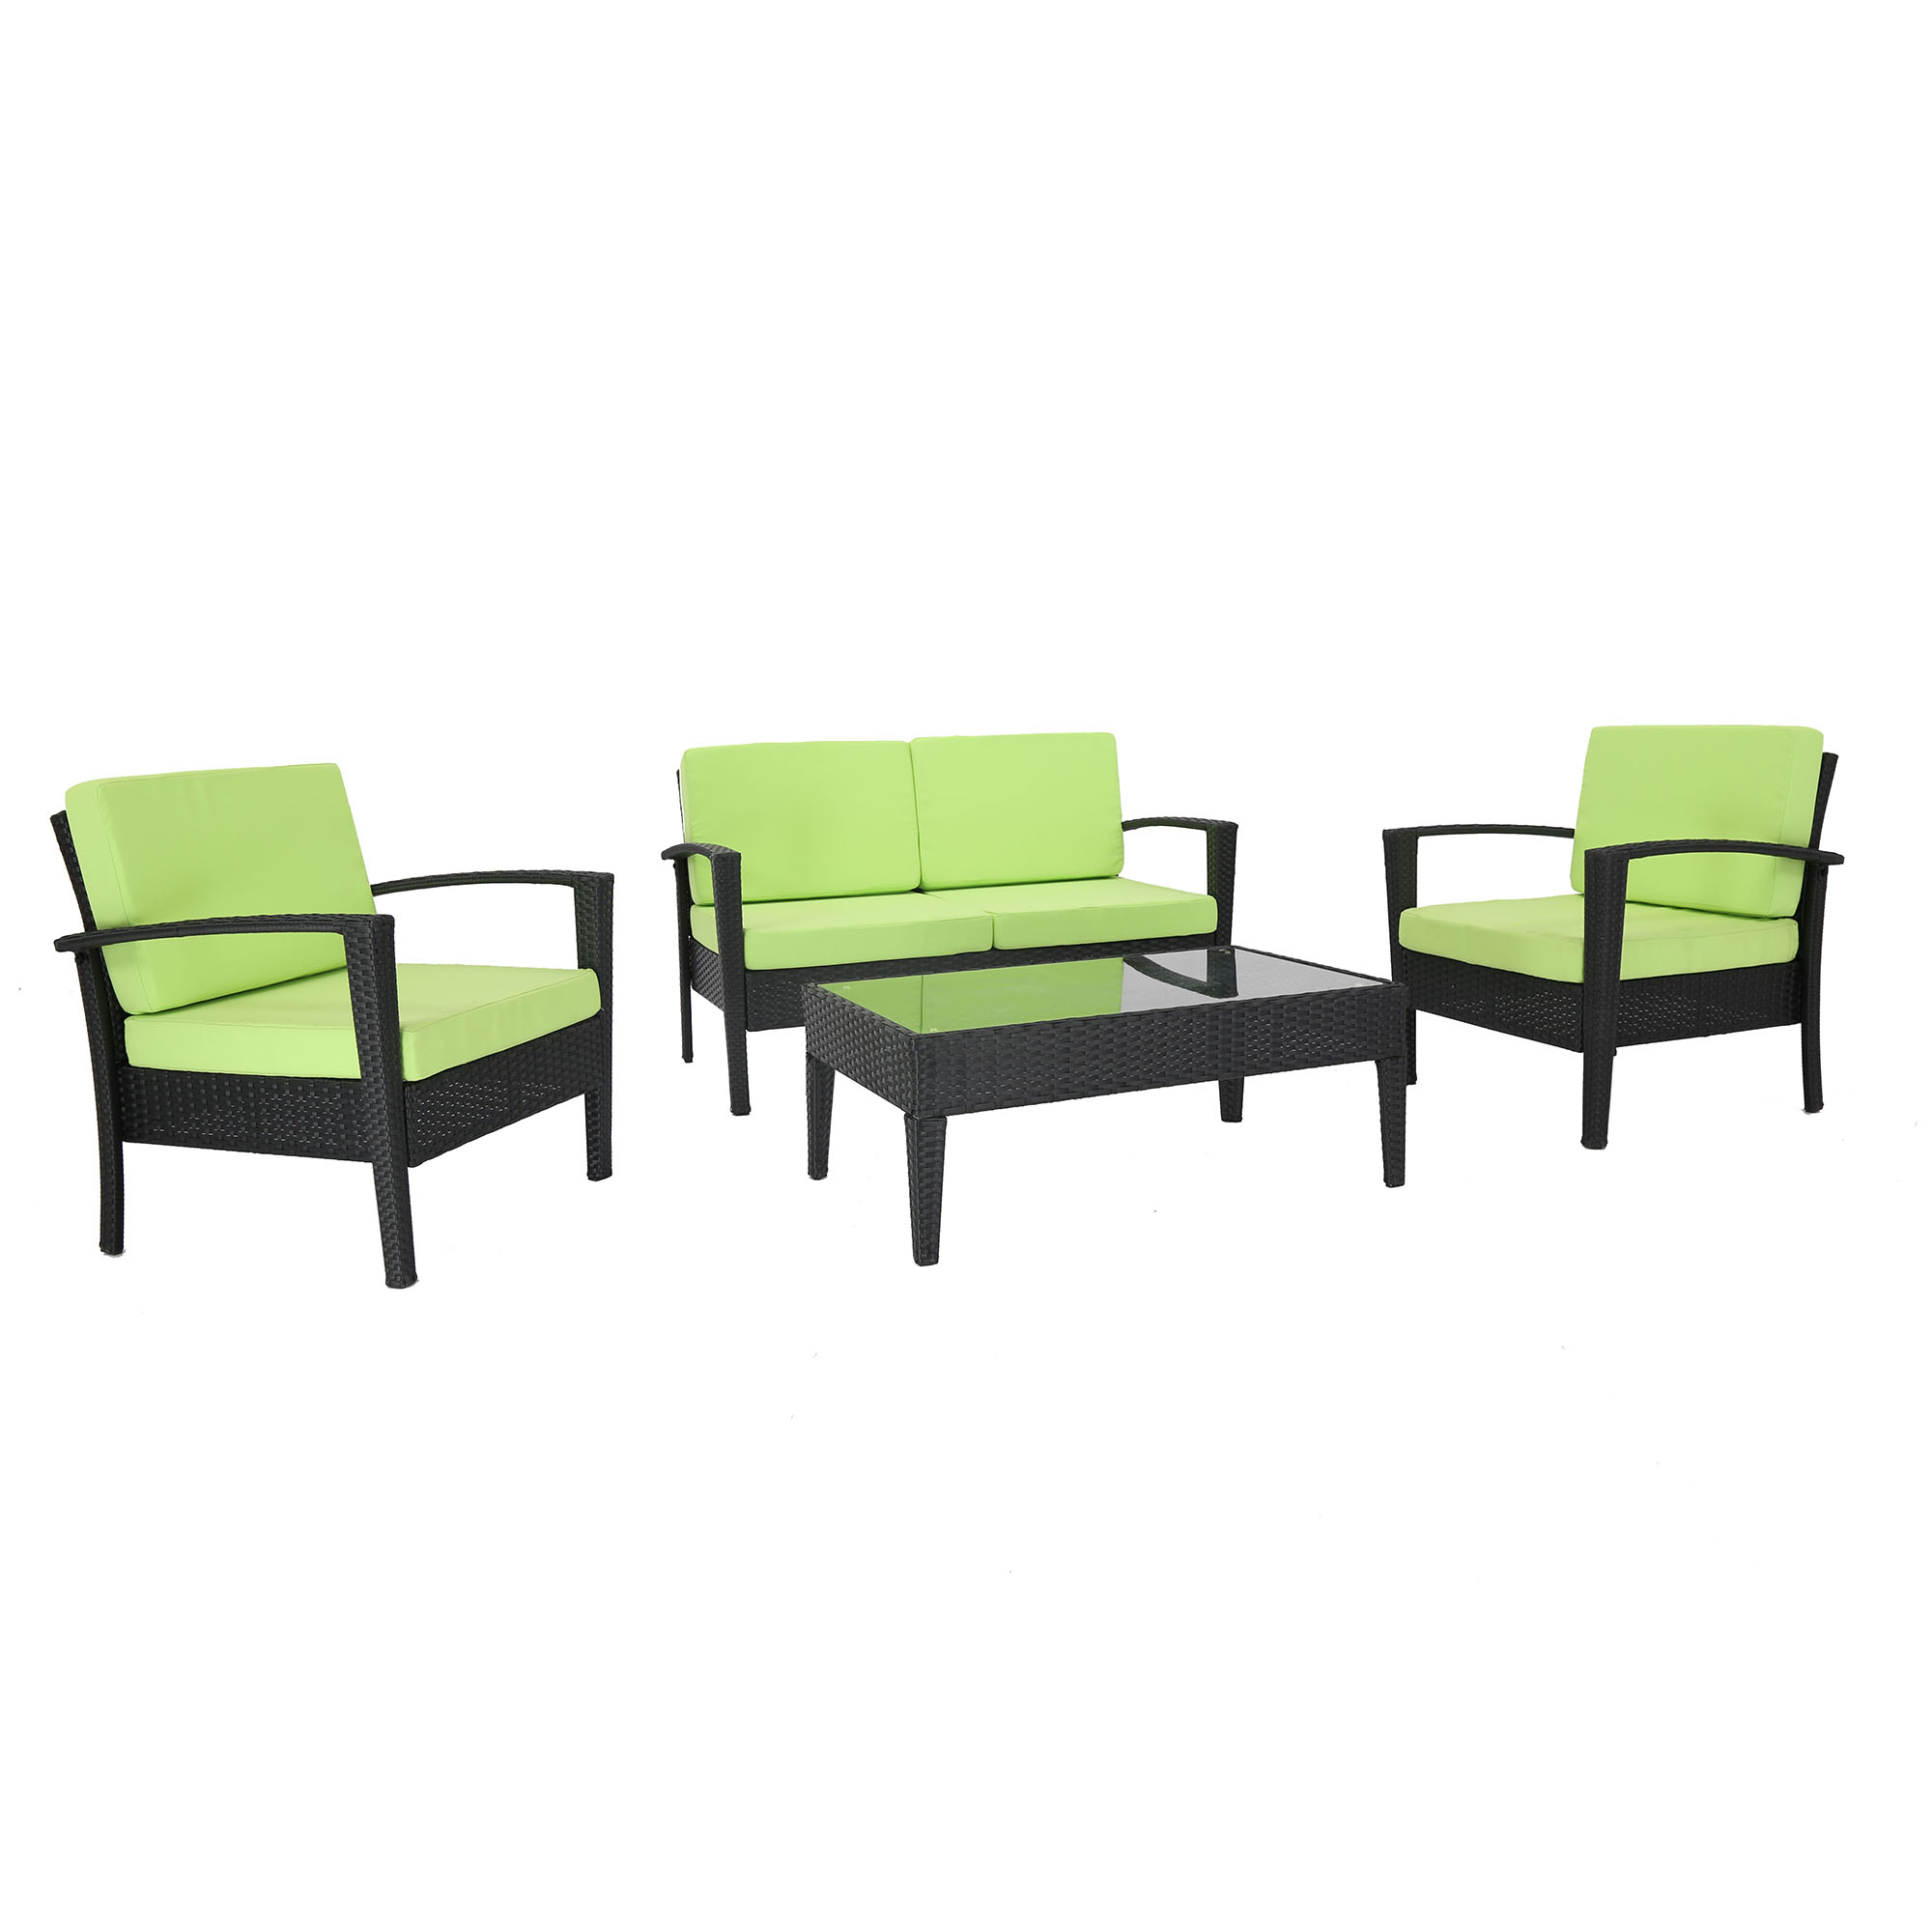 Baner Garden Wicker 4 Piece Black Patio Conversation Set with Green Cushions - image 1 of 11